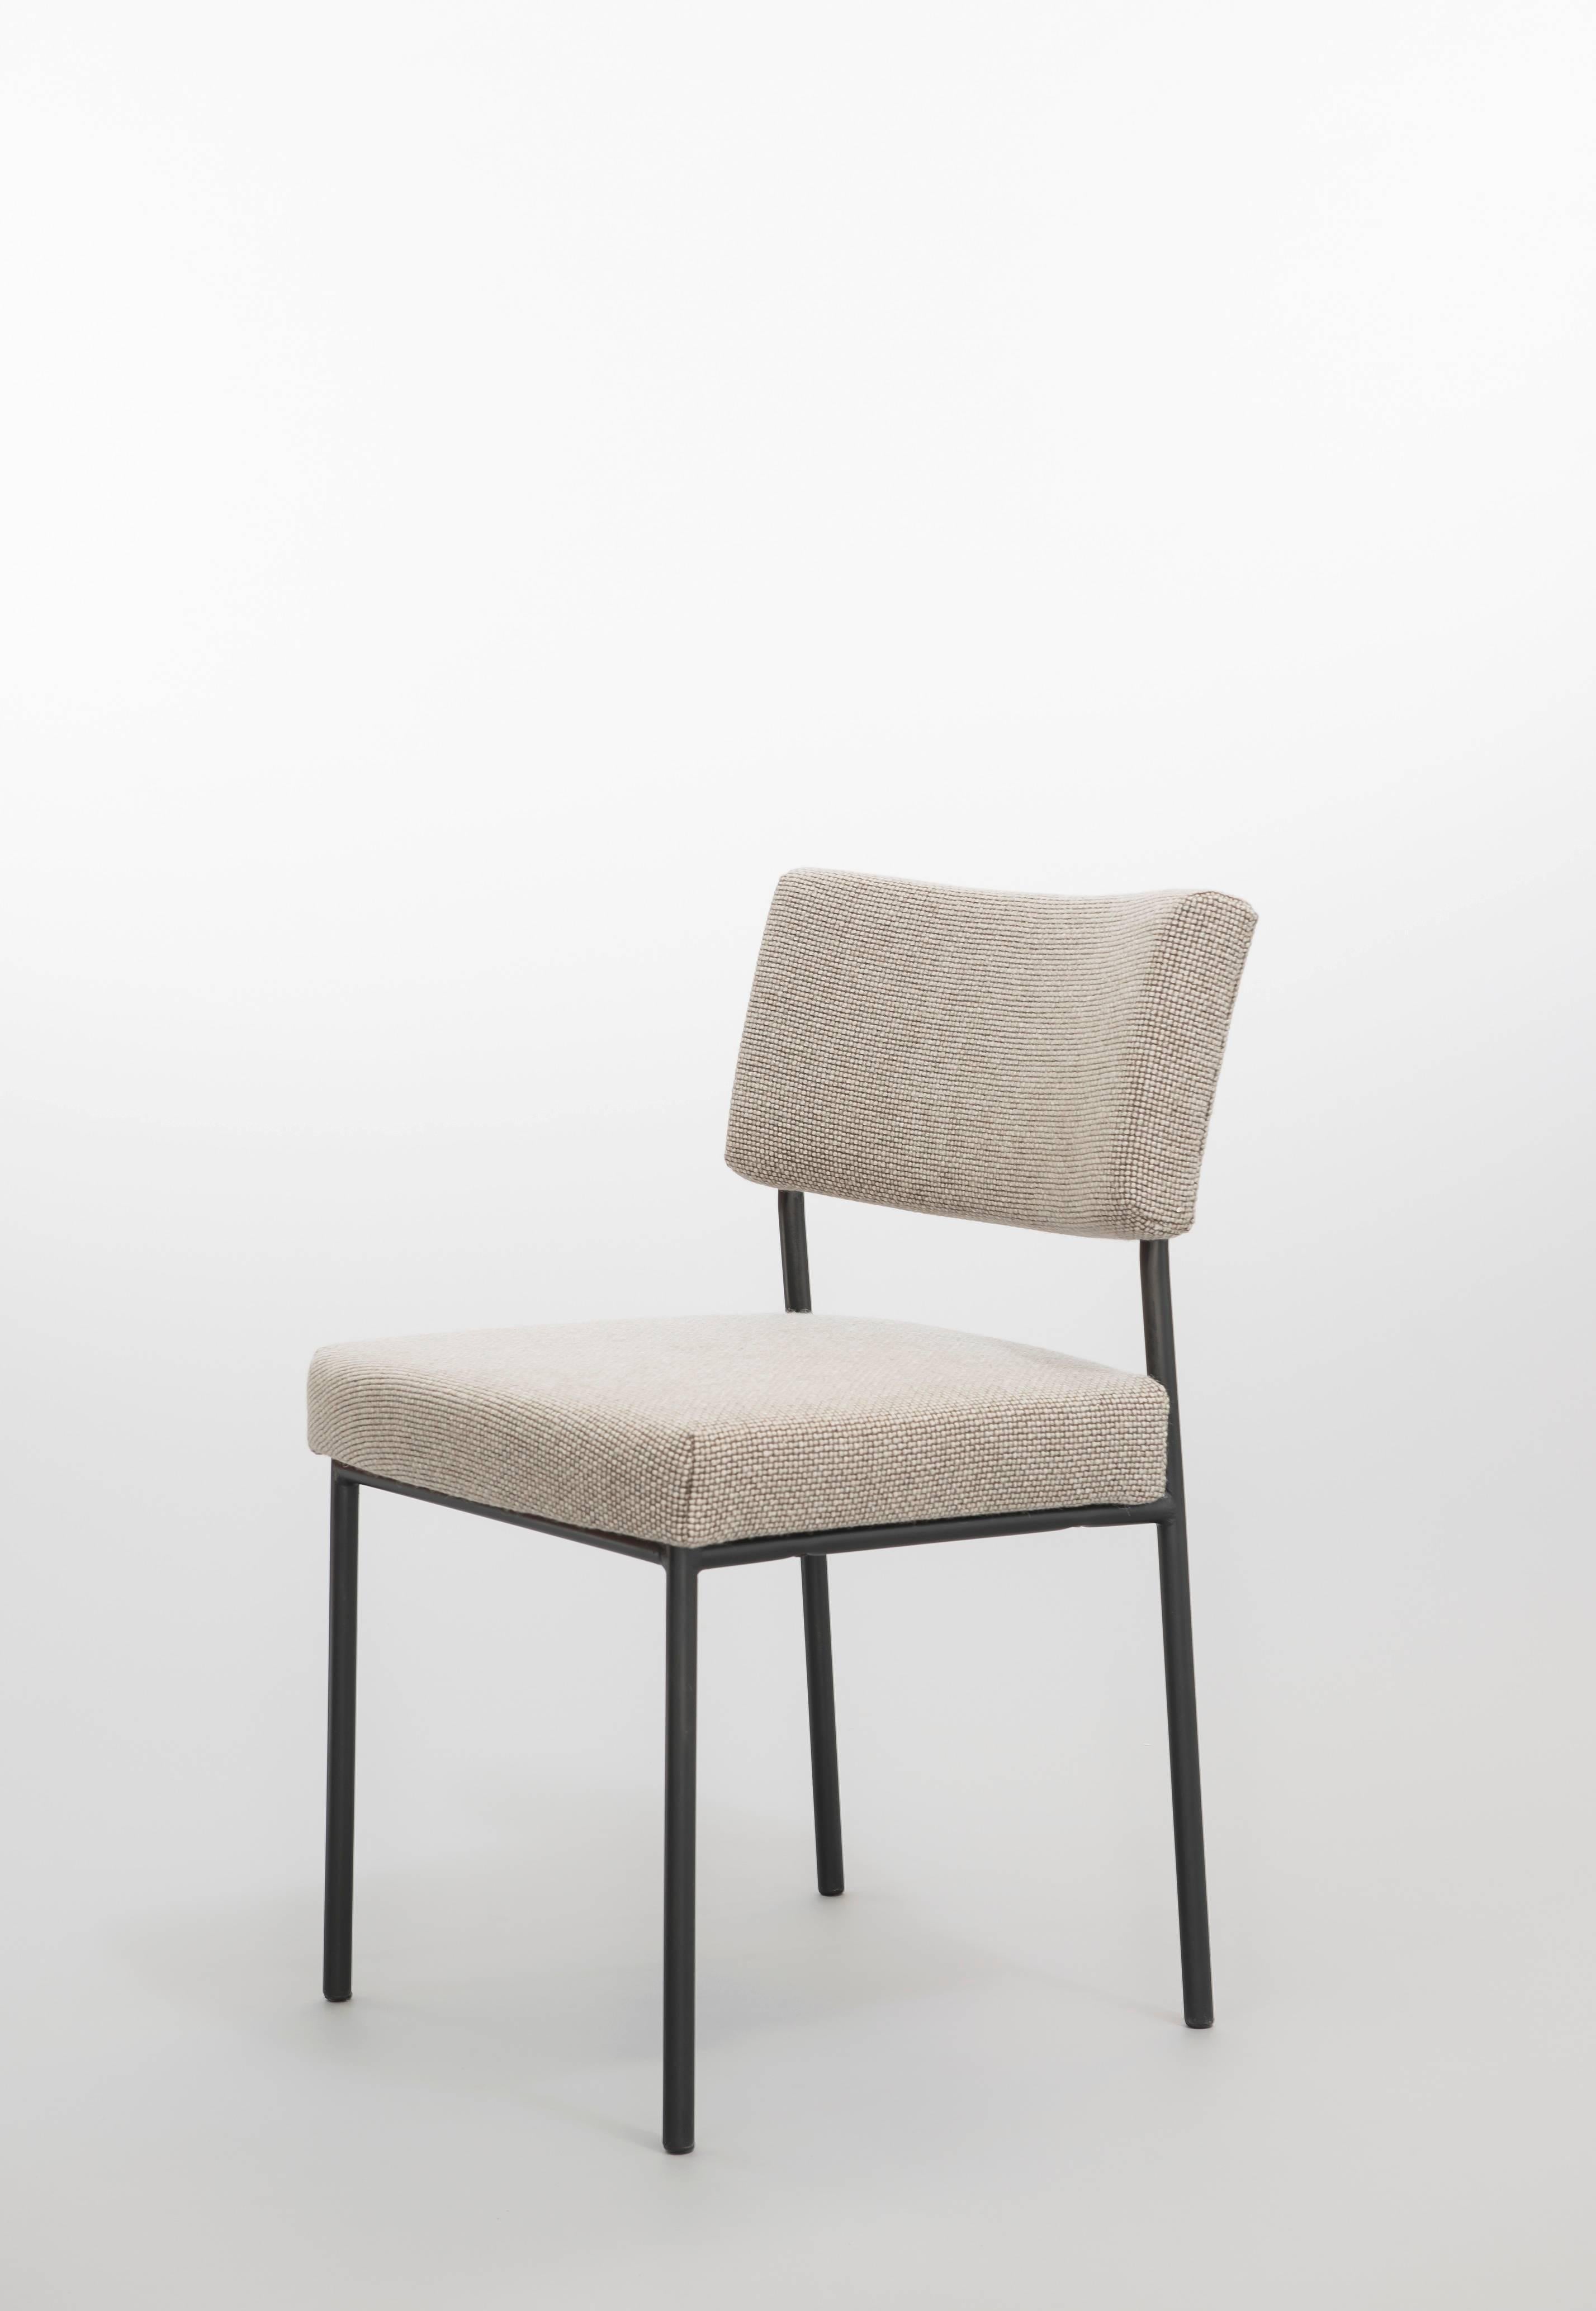 Set of 18 chairs 762 by Joseph-André Motte (1925-2013)
Steiner edition - 1957/1958

Reference:

Favardin P., Steiner et l'aventure du design, Norma editions, 2007, Paris, p. 129